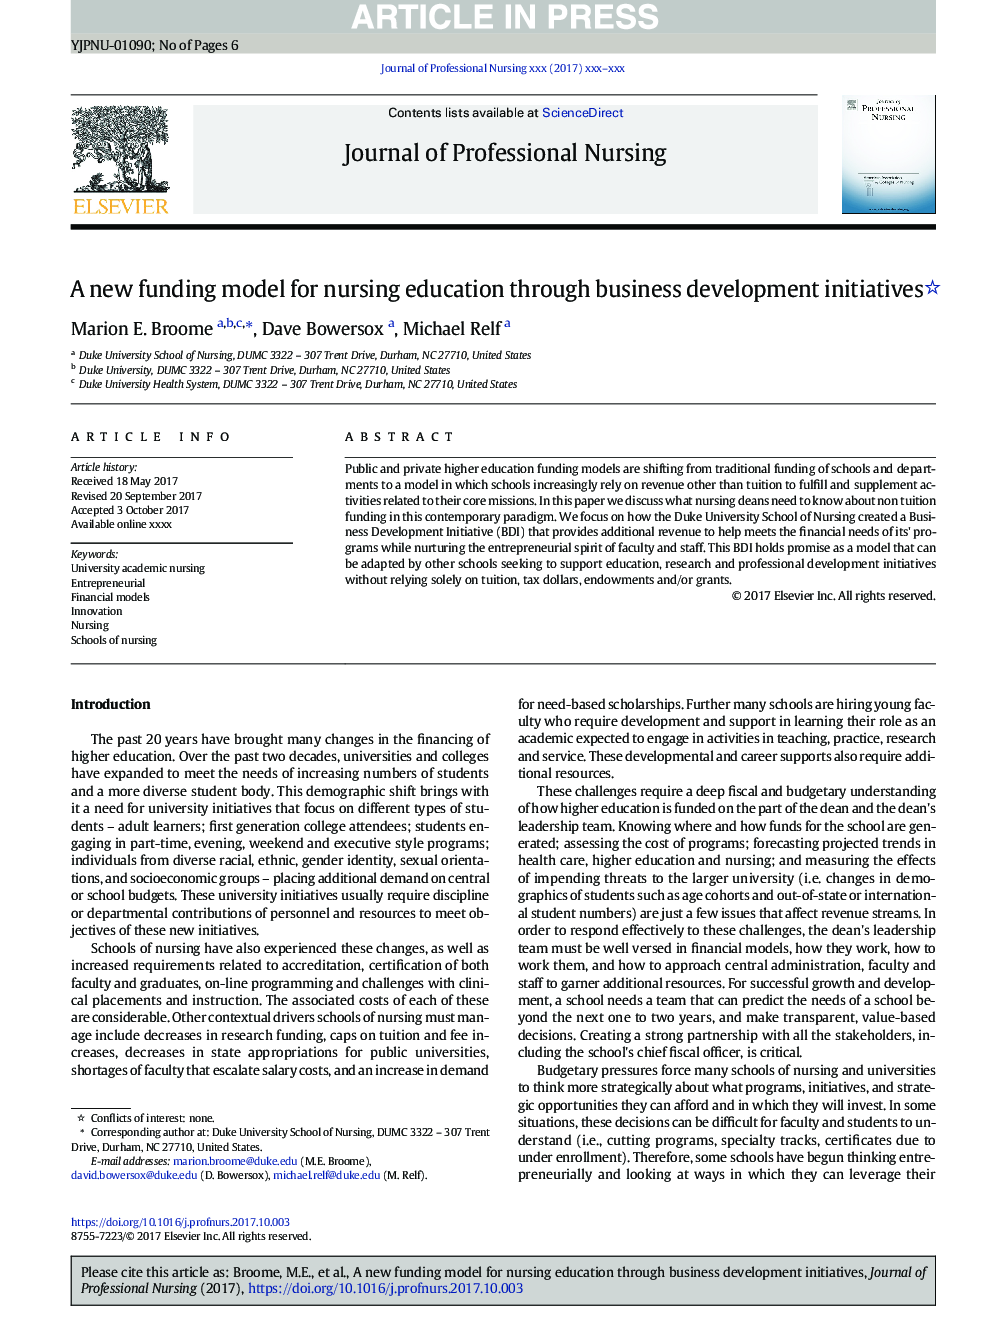 A new funding model for nursing education through business development initiatives